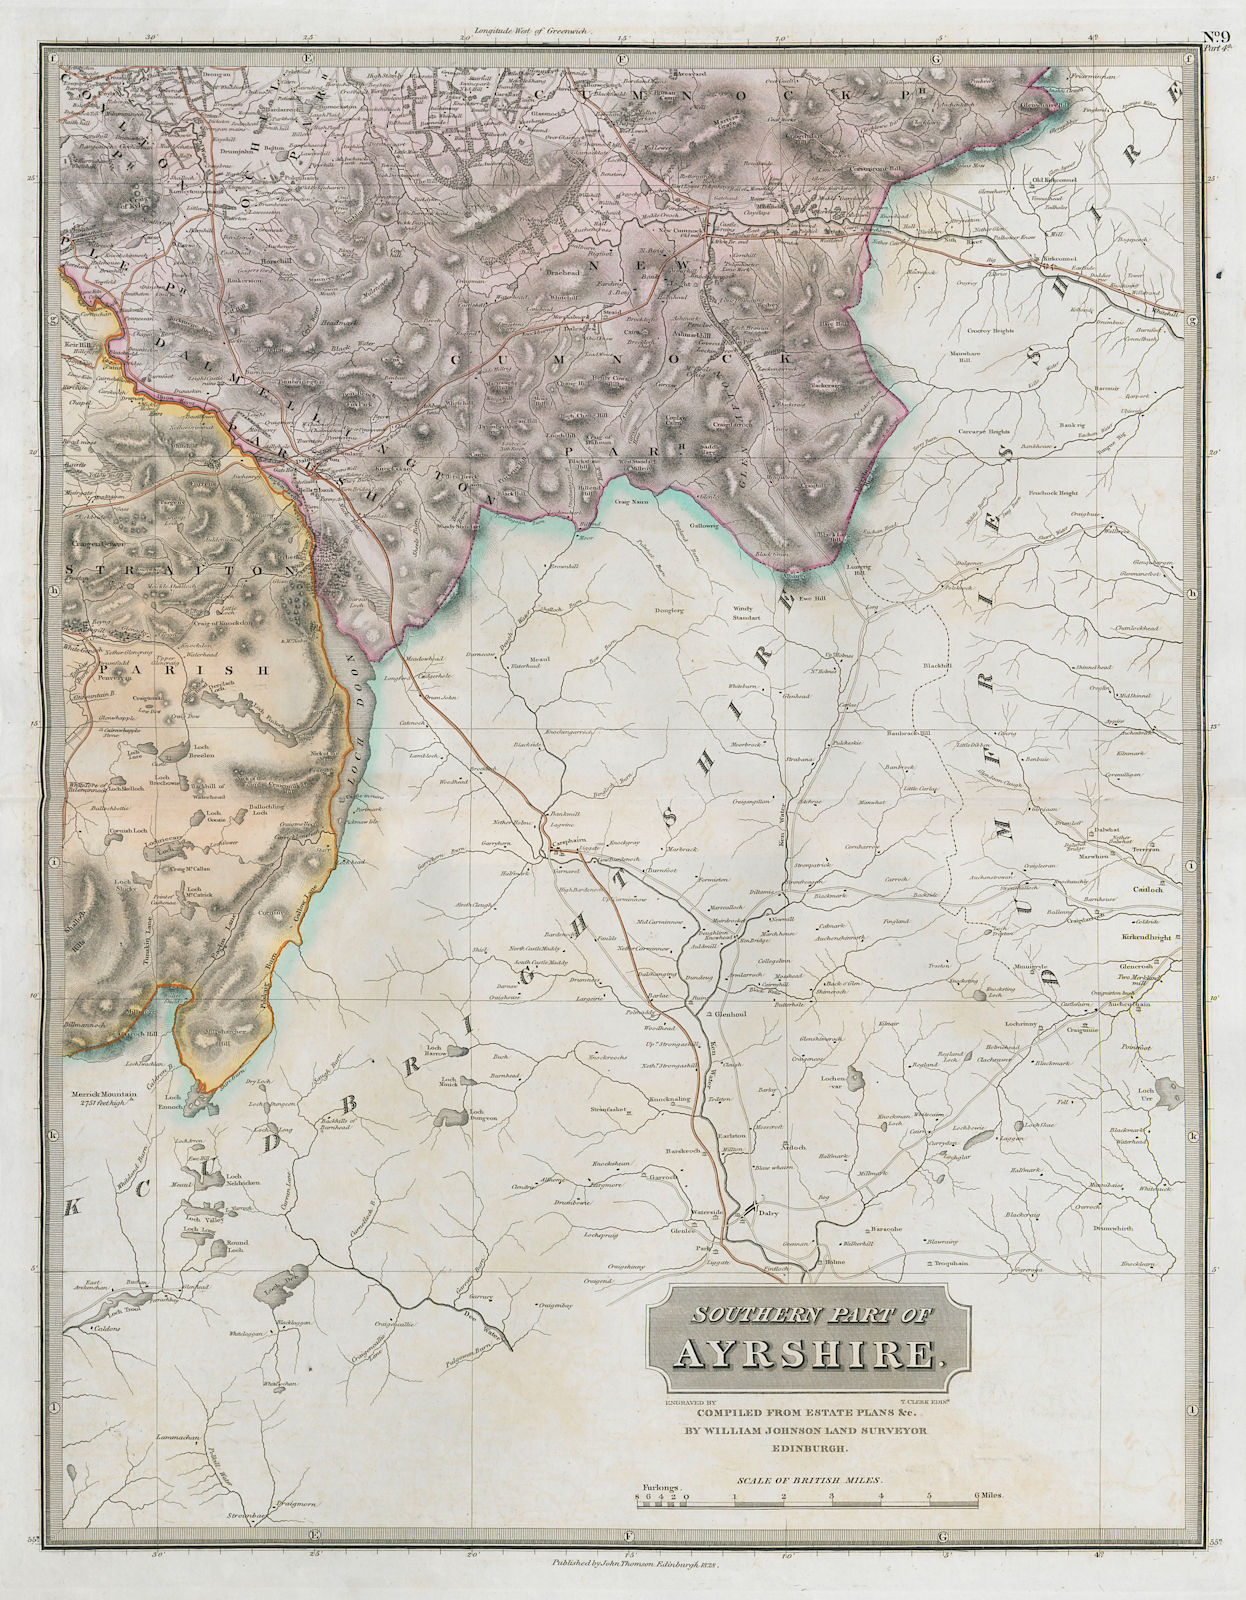 Ayrshire south-east sheet. Dalmellington New Cumnock. THOMSON 1832 old map